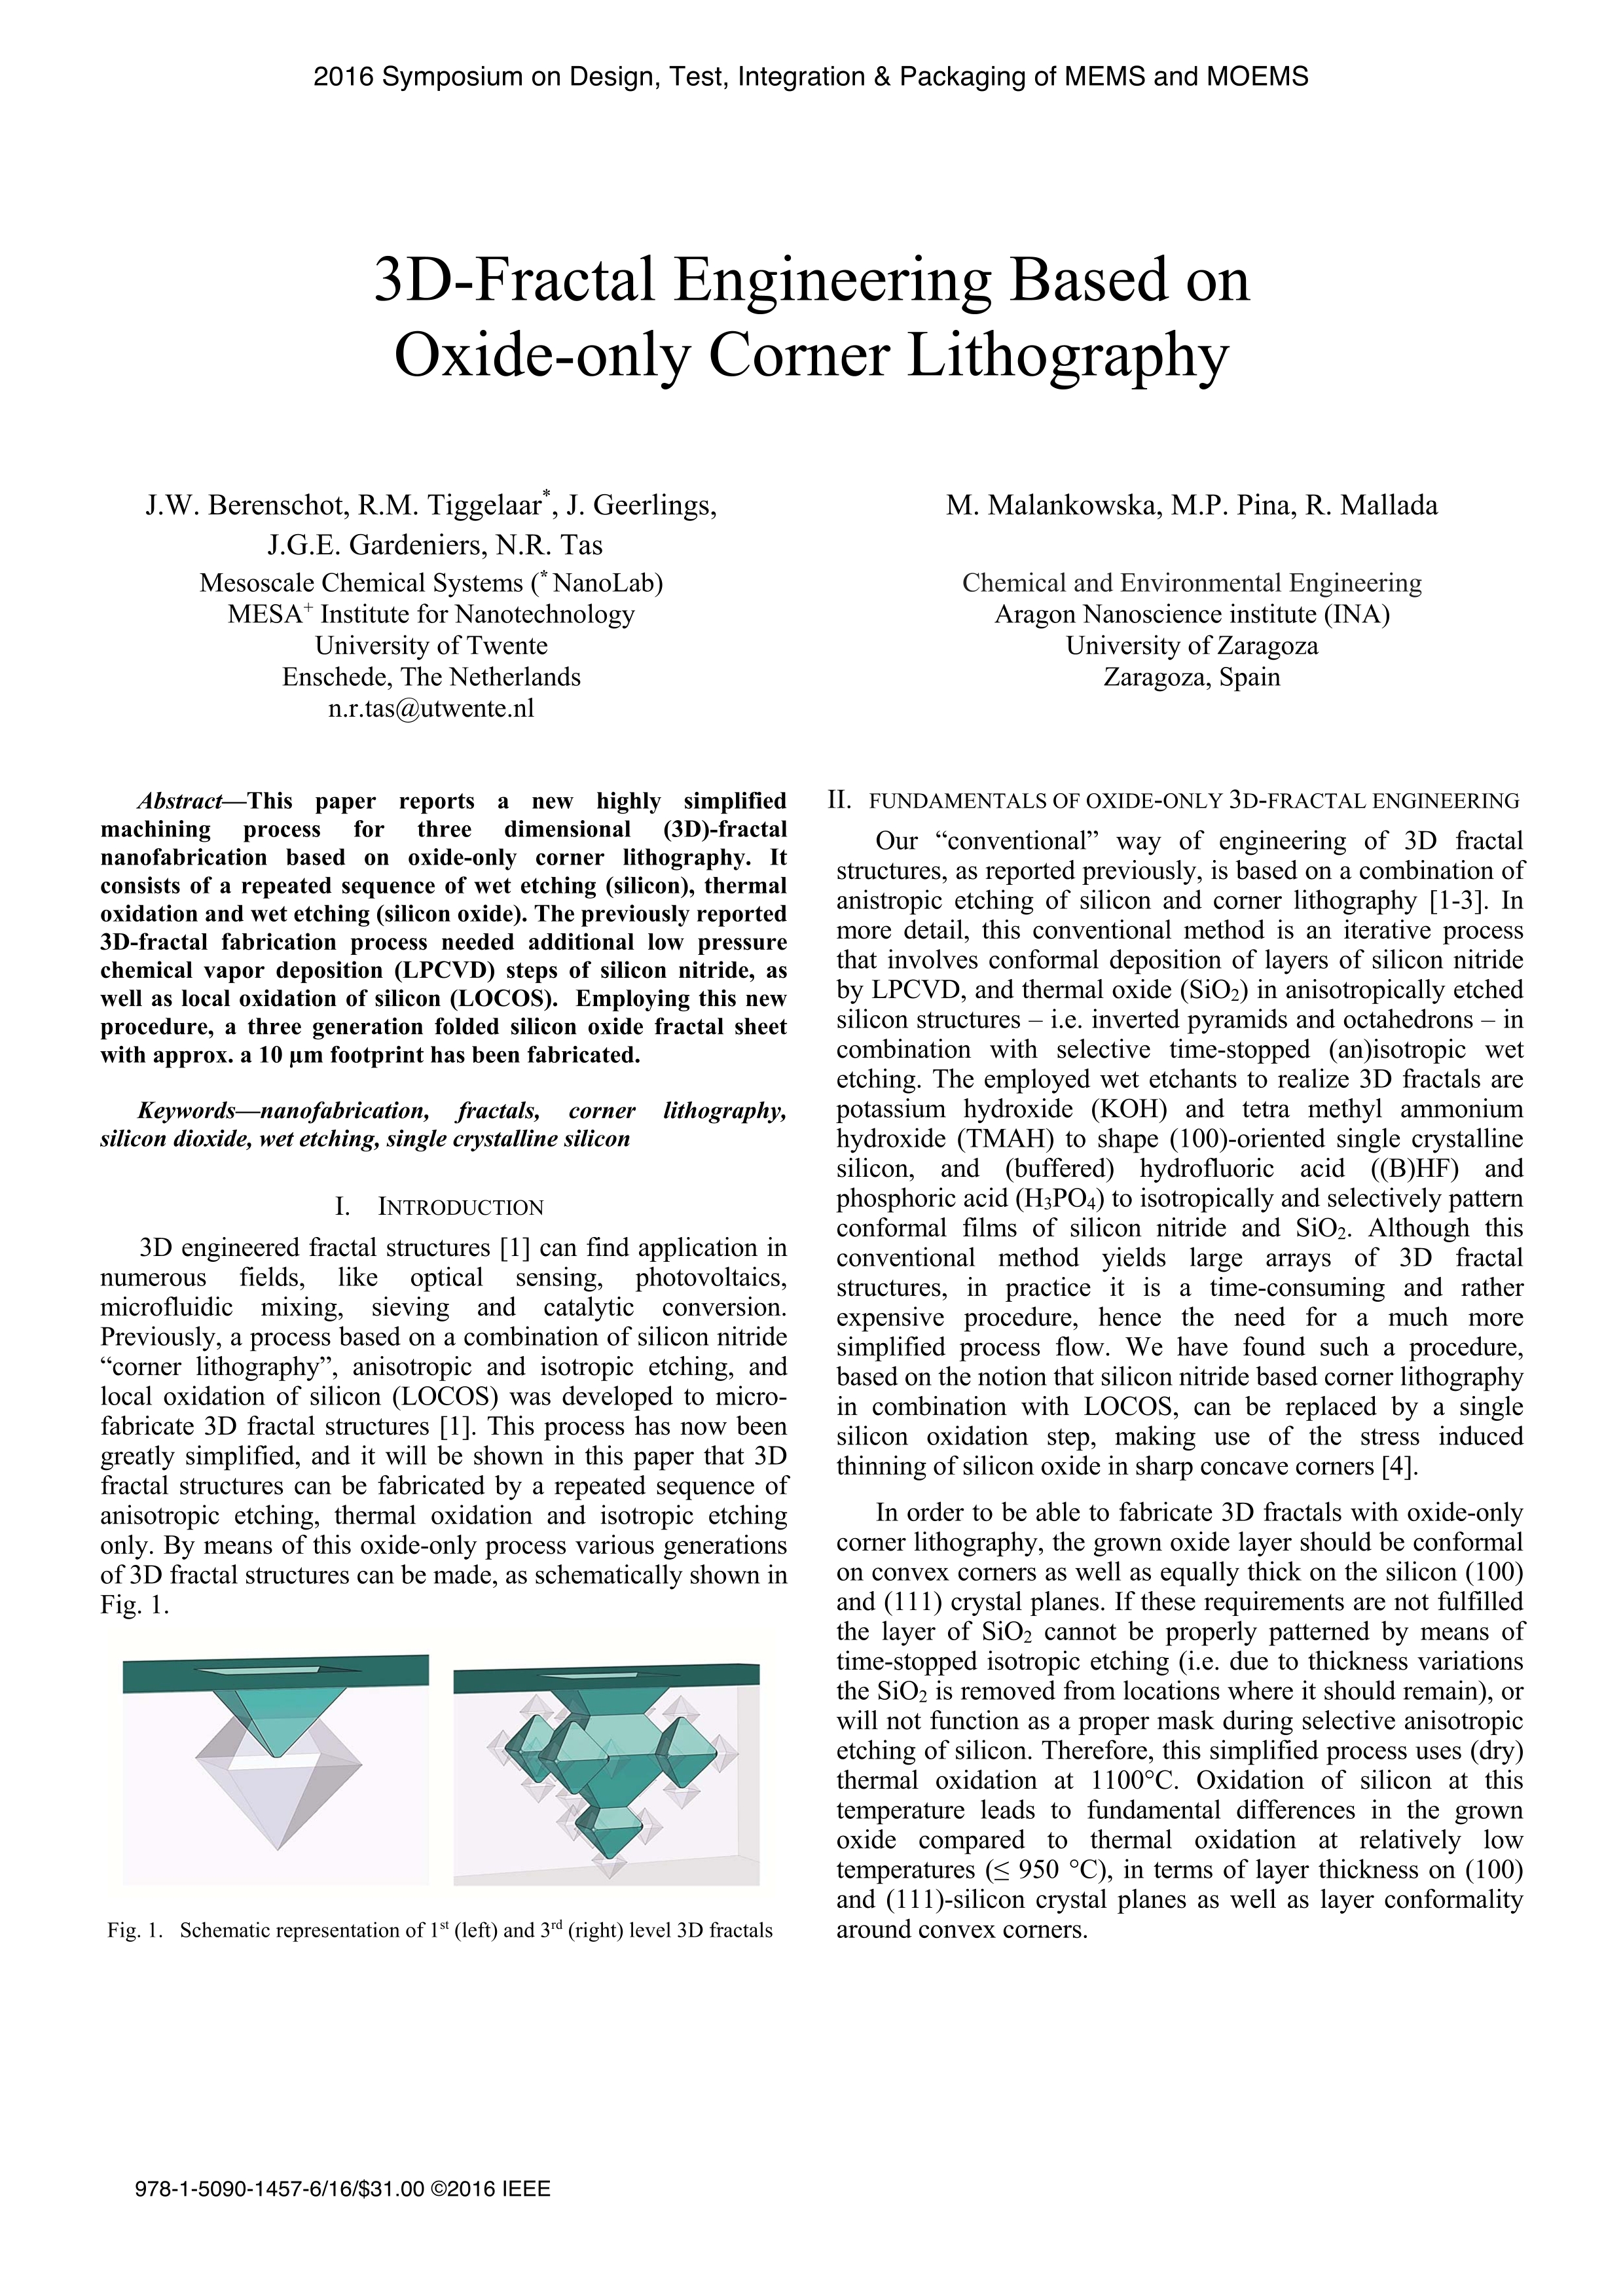 3D-Fractal engineering based on oxide-only corner lithography